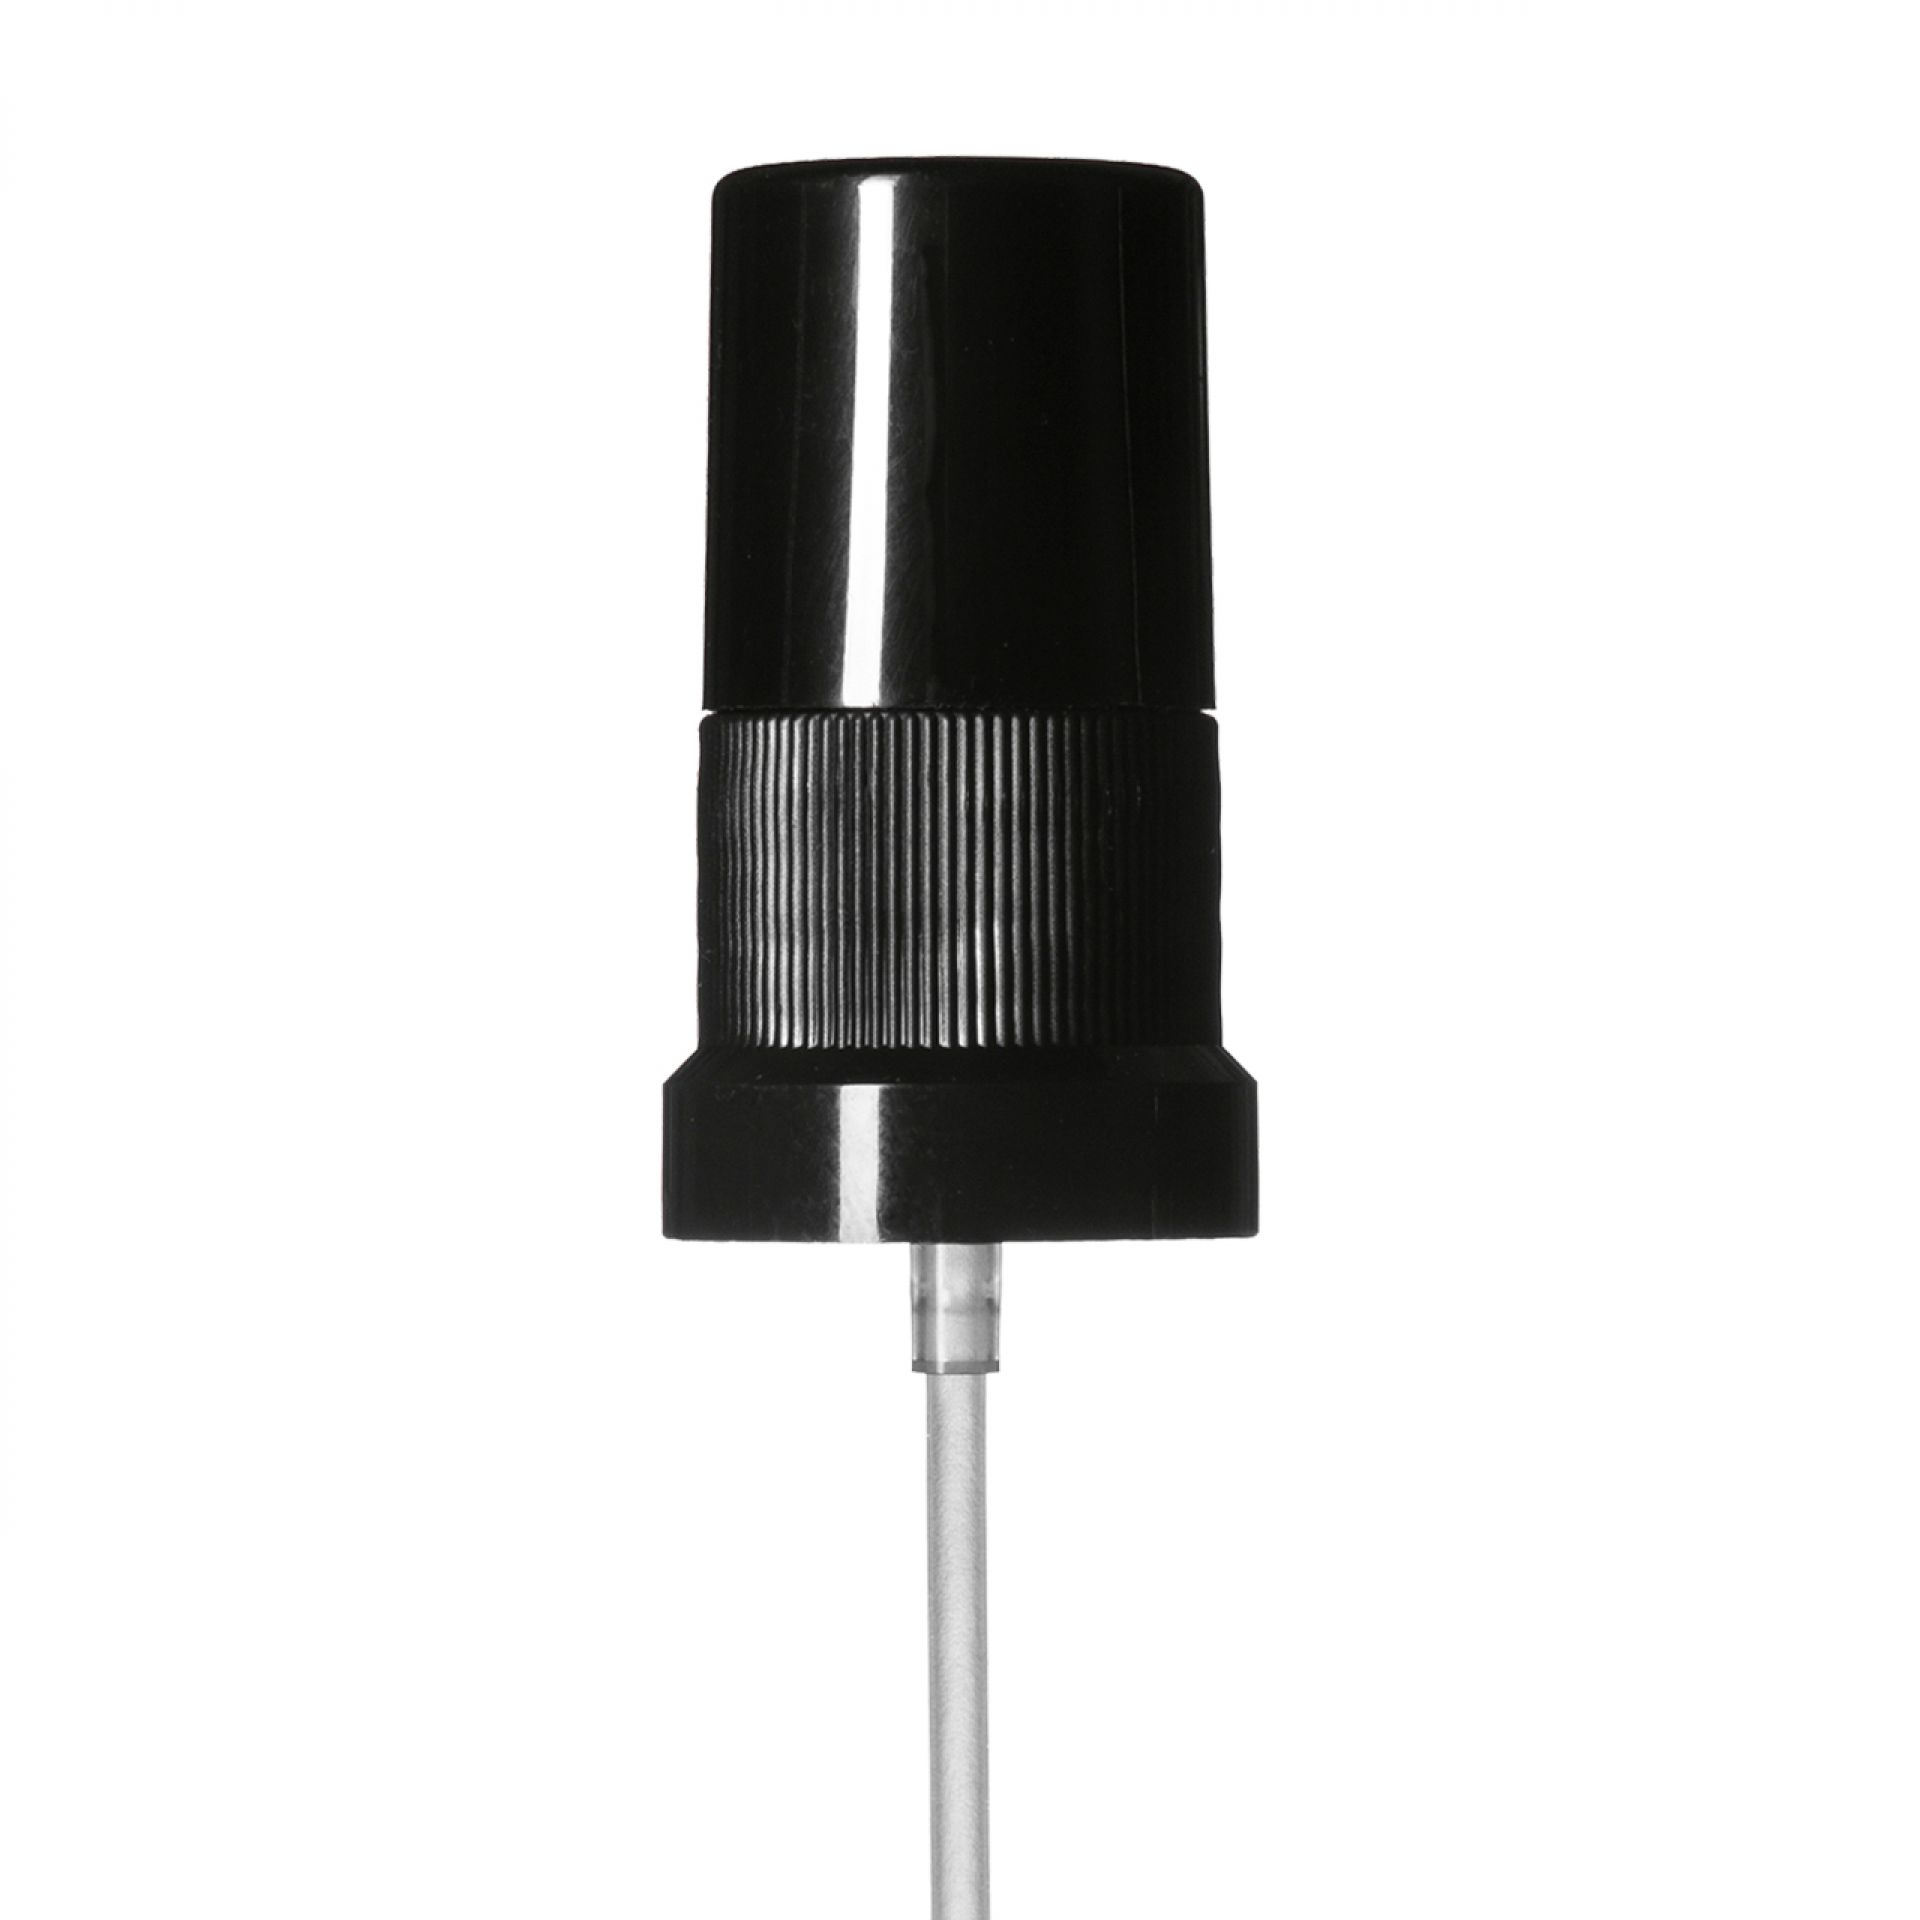 Mist sprayer Classic, DIN18, PP, black, ribbed, dose 0.10 ml, black overcap (Orion 20)